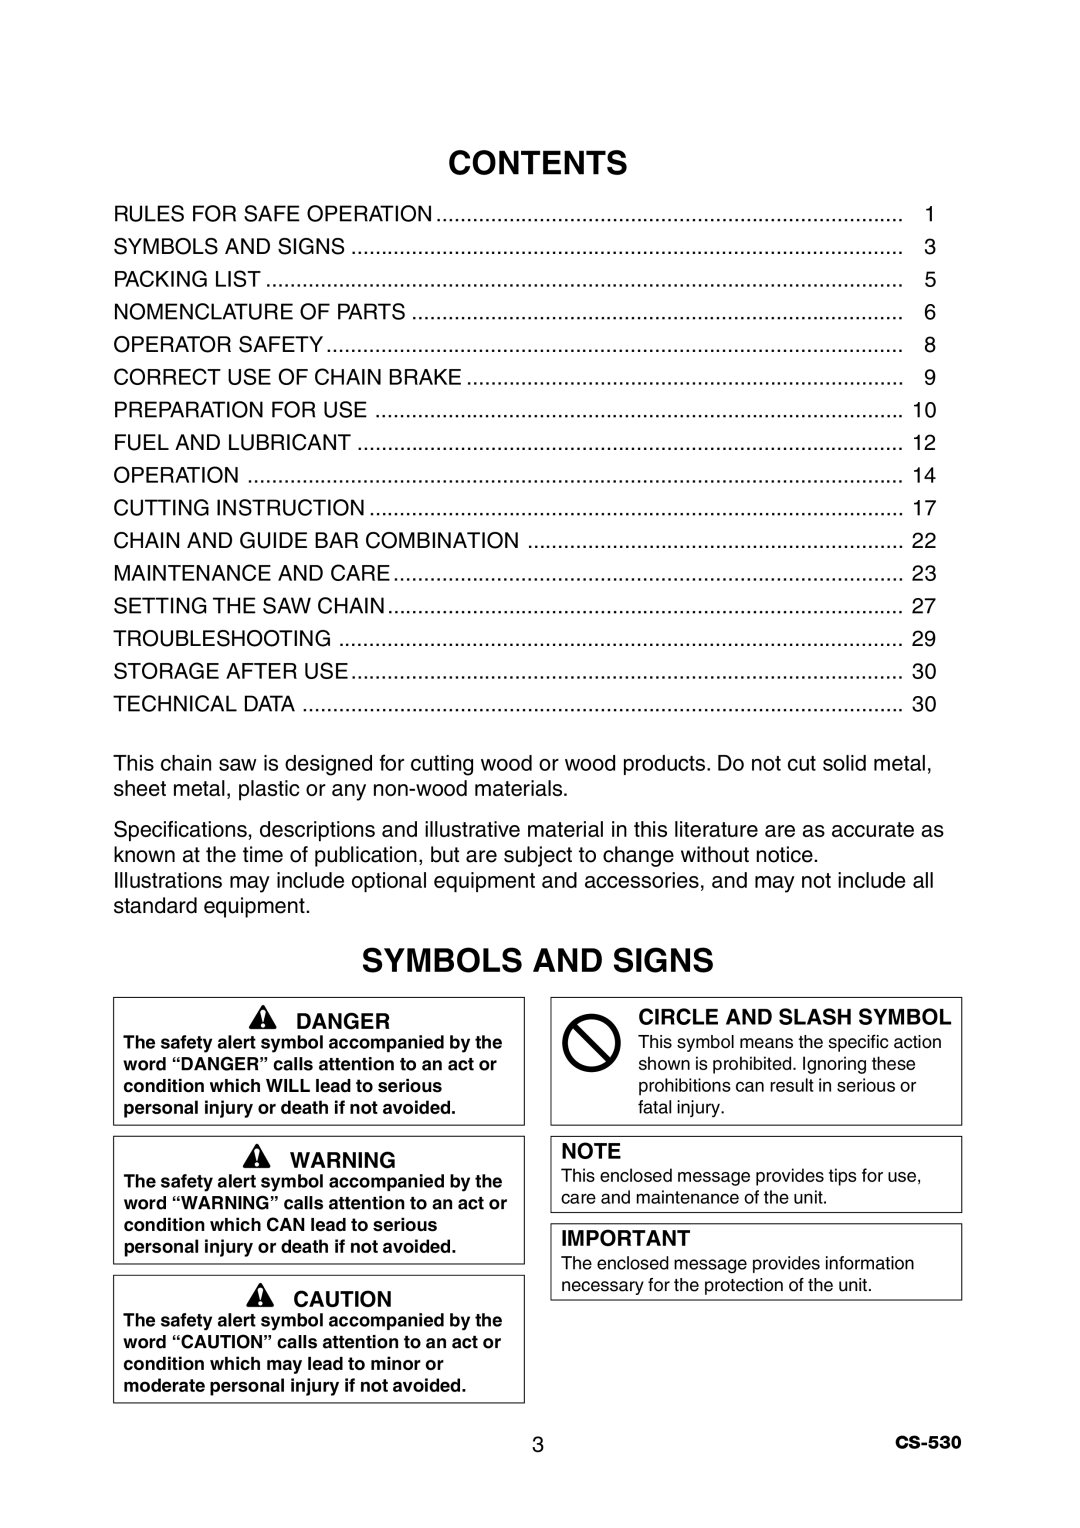 Echo CS-530 instruction manual Contents, Symbols And Signs, Danger, Circle And Slash Symbol 